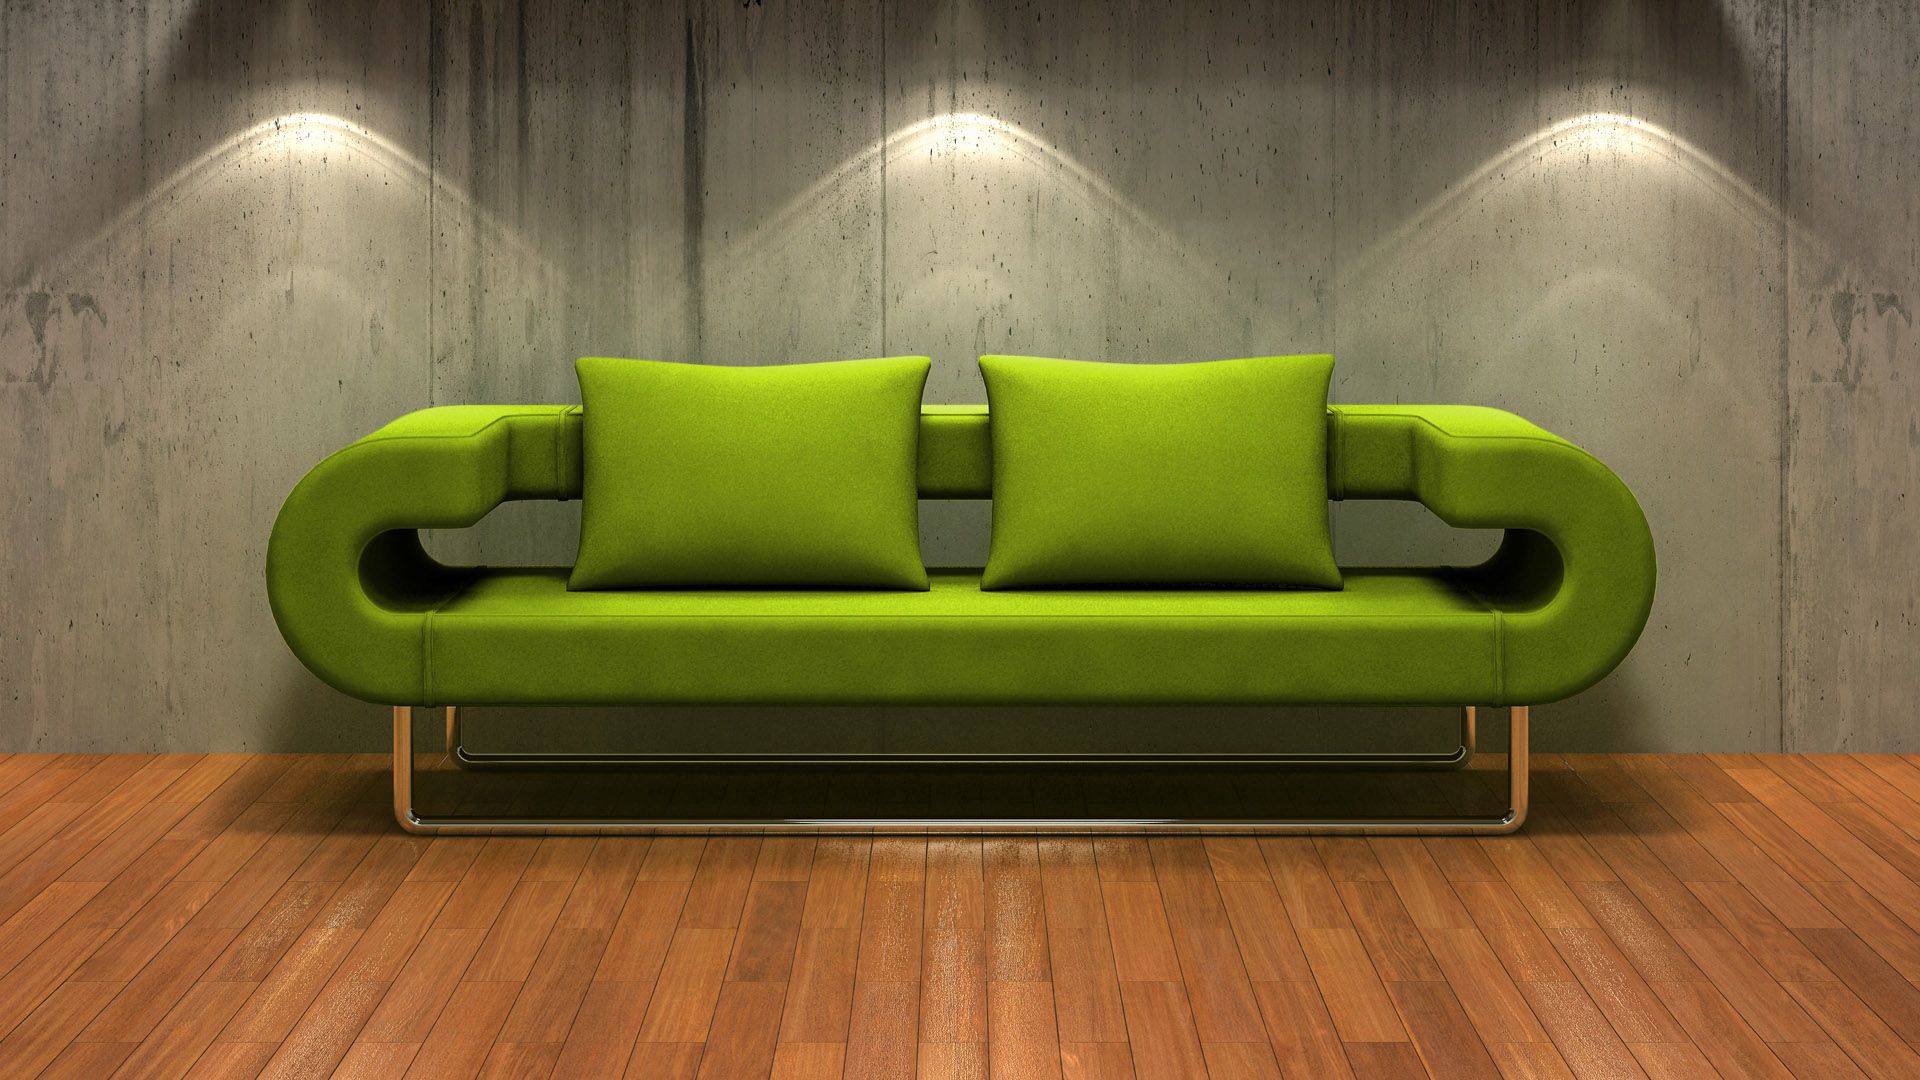 Download wallpaper 1920x1080 sofa, furniture, style, modern full hd, hdtv,  fhd, 1080p hd background